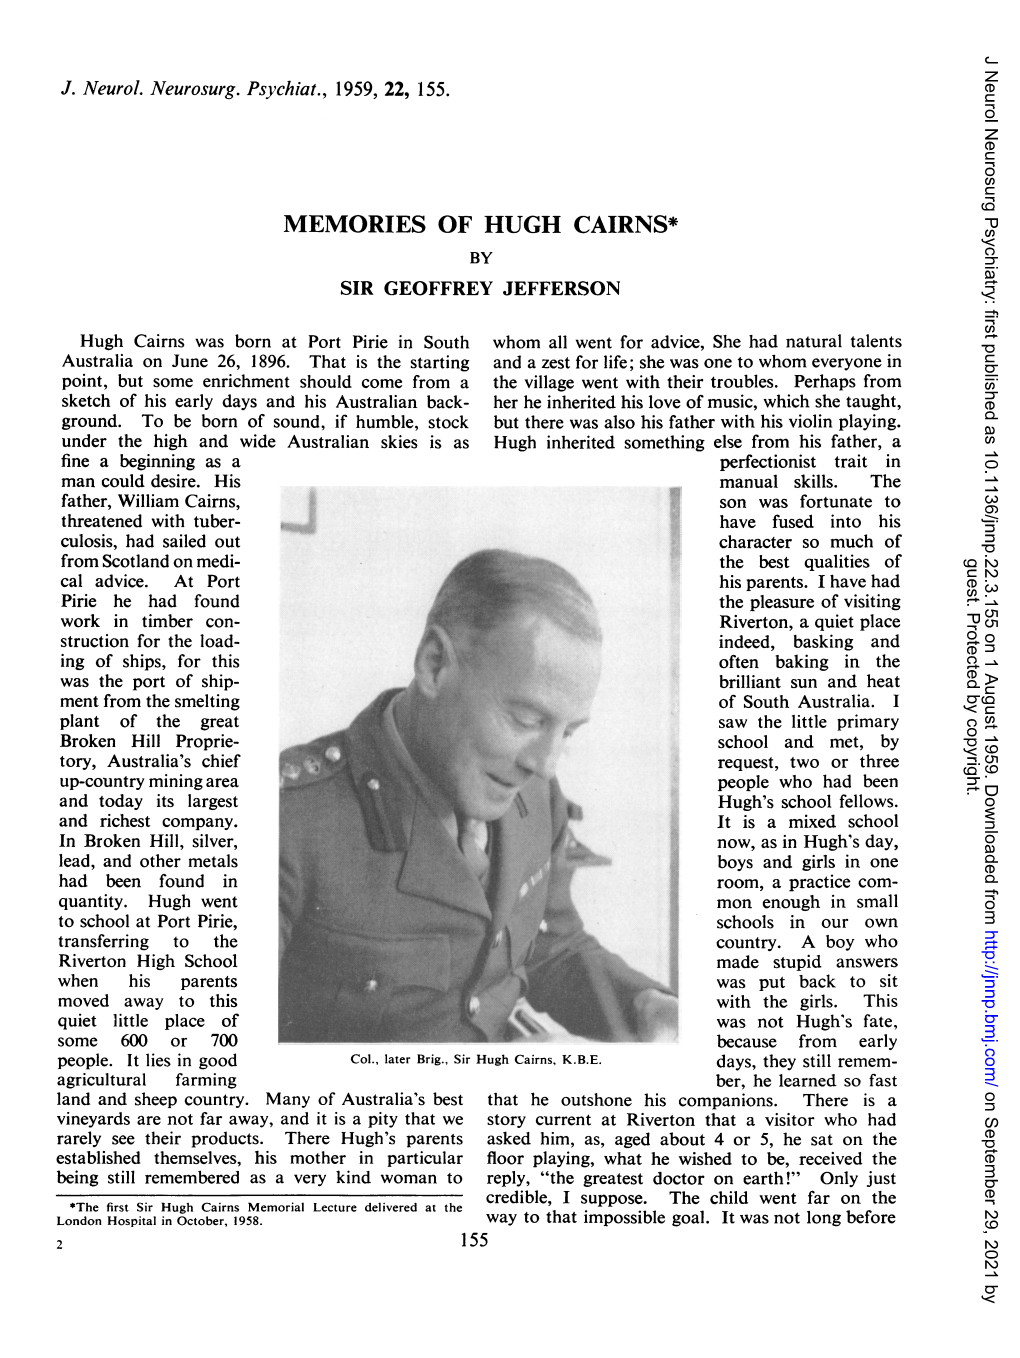 Memories of Hugh Cairns* by Sir Geoffrey Jefferson